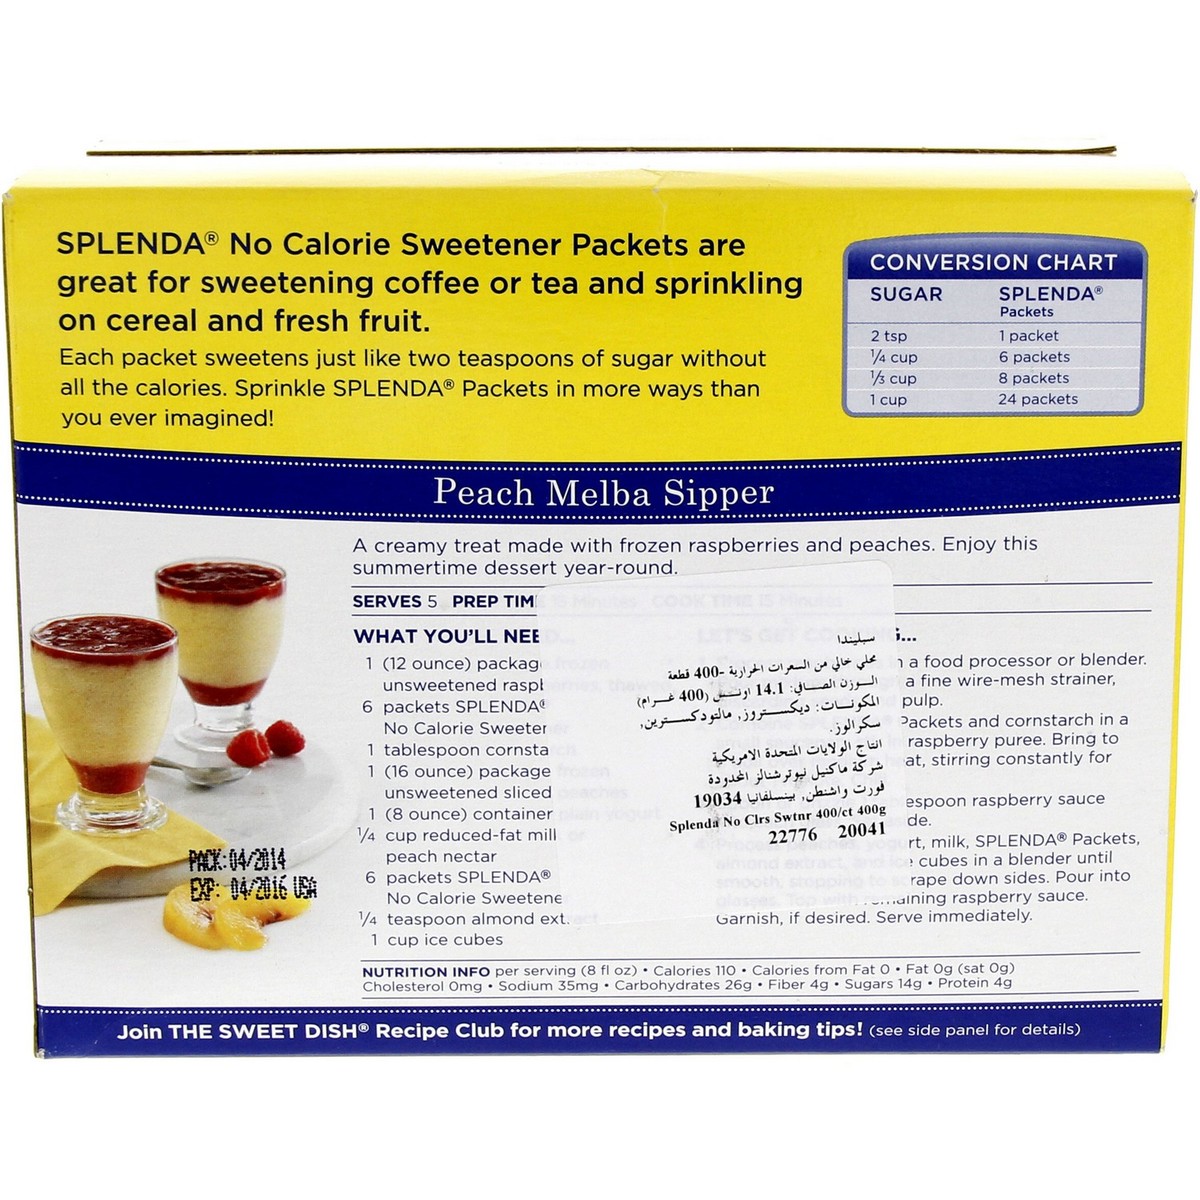 Splenda No Calorie Sweetener 400 Packets 400 g